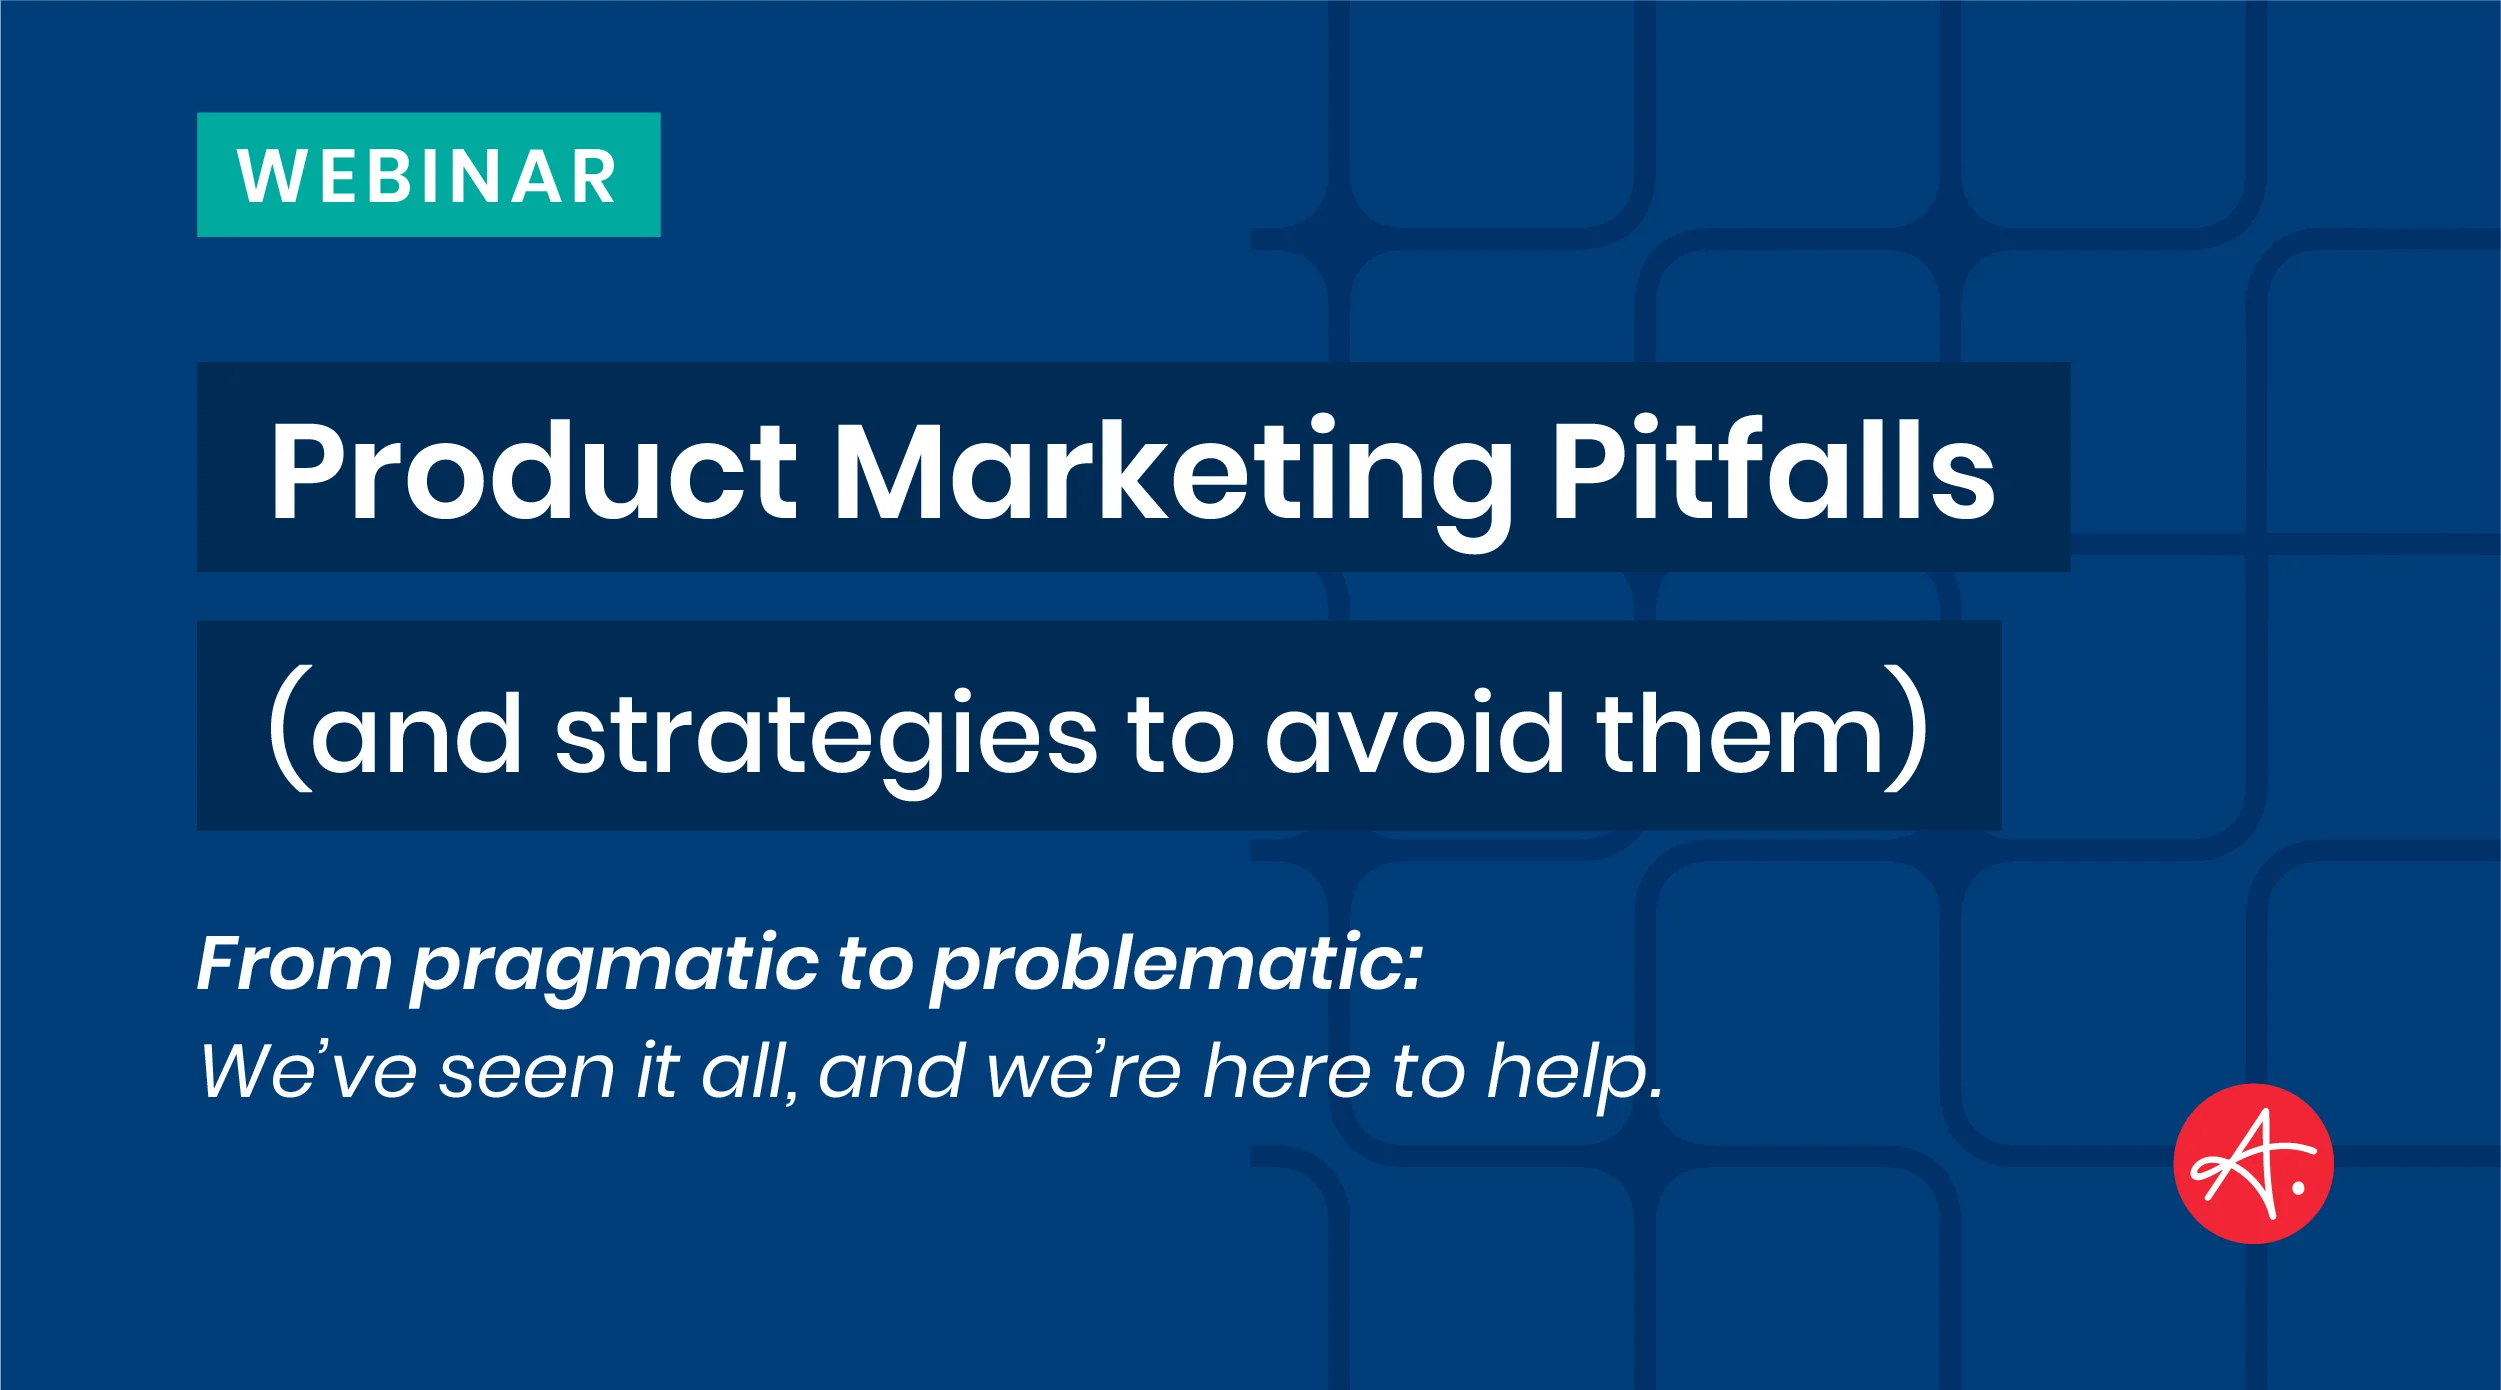 Product Marketing Pitfalls Webinar